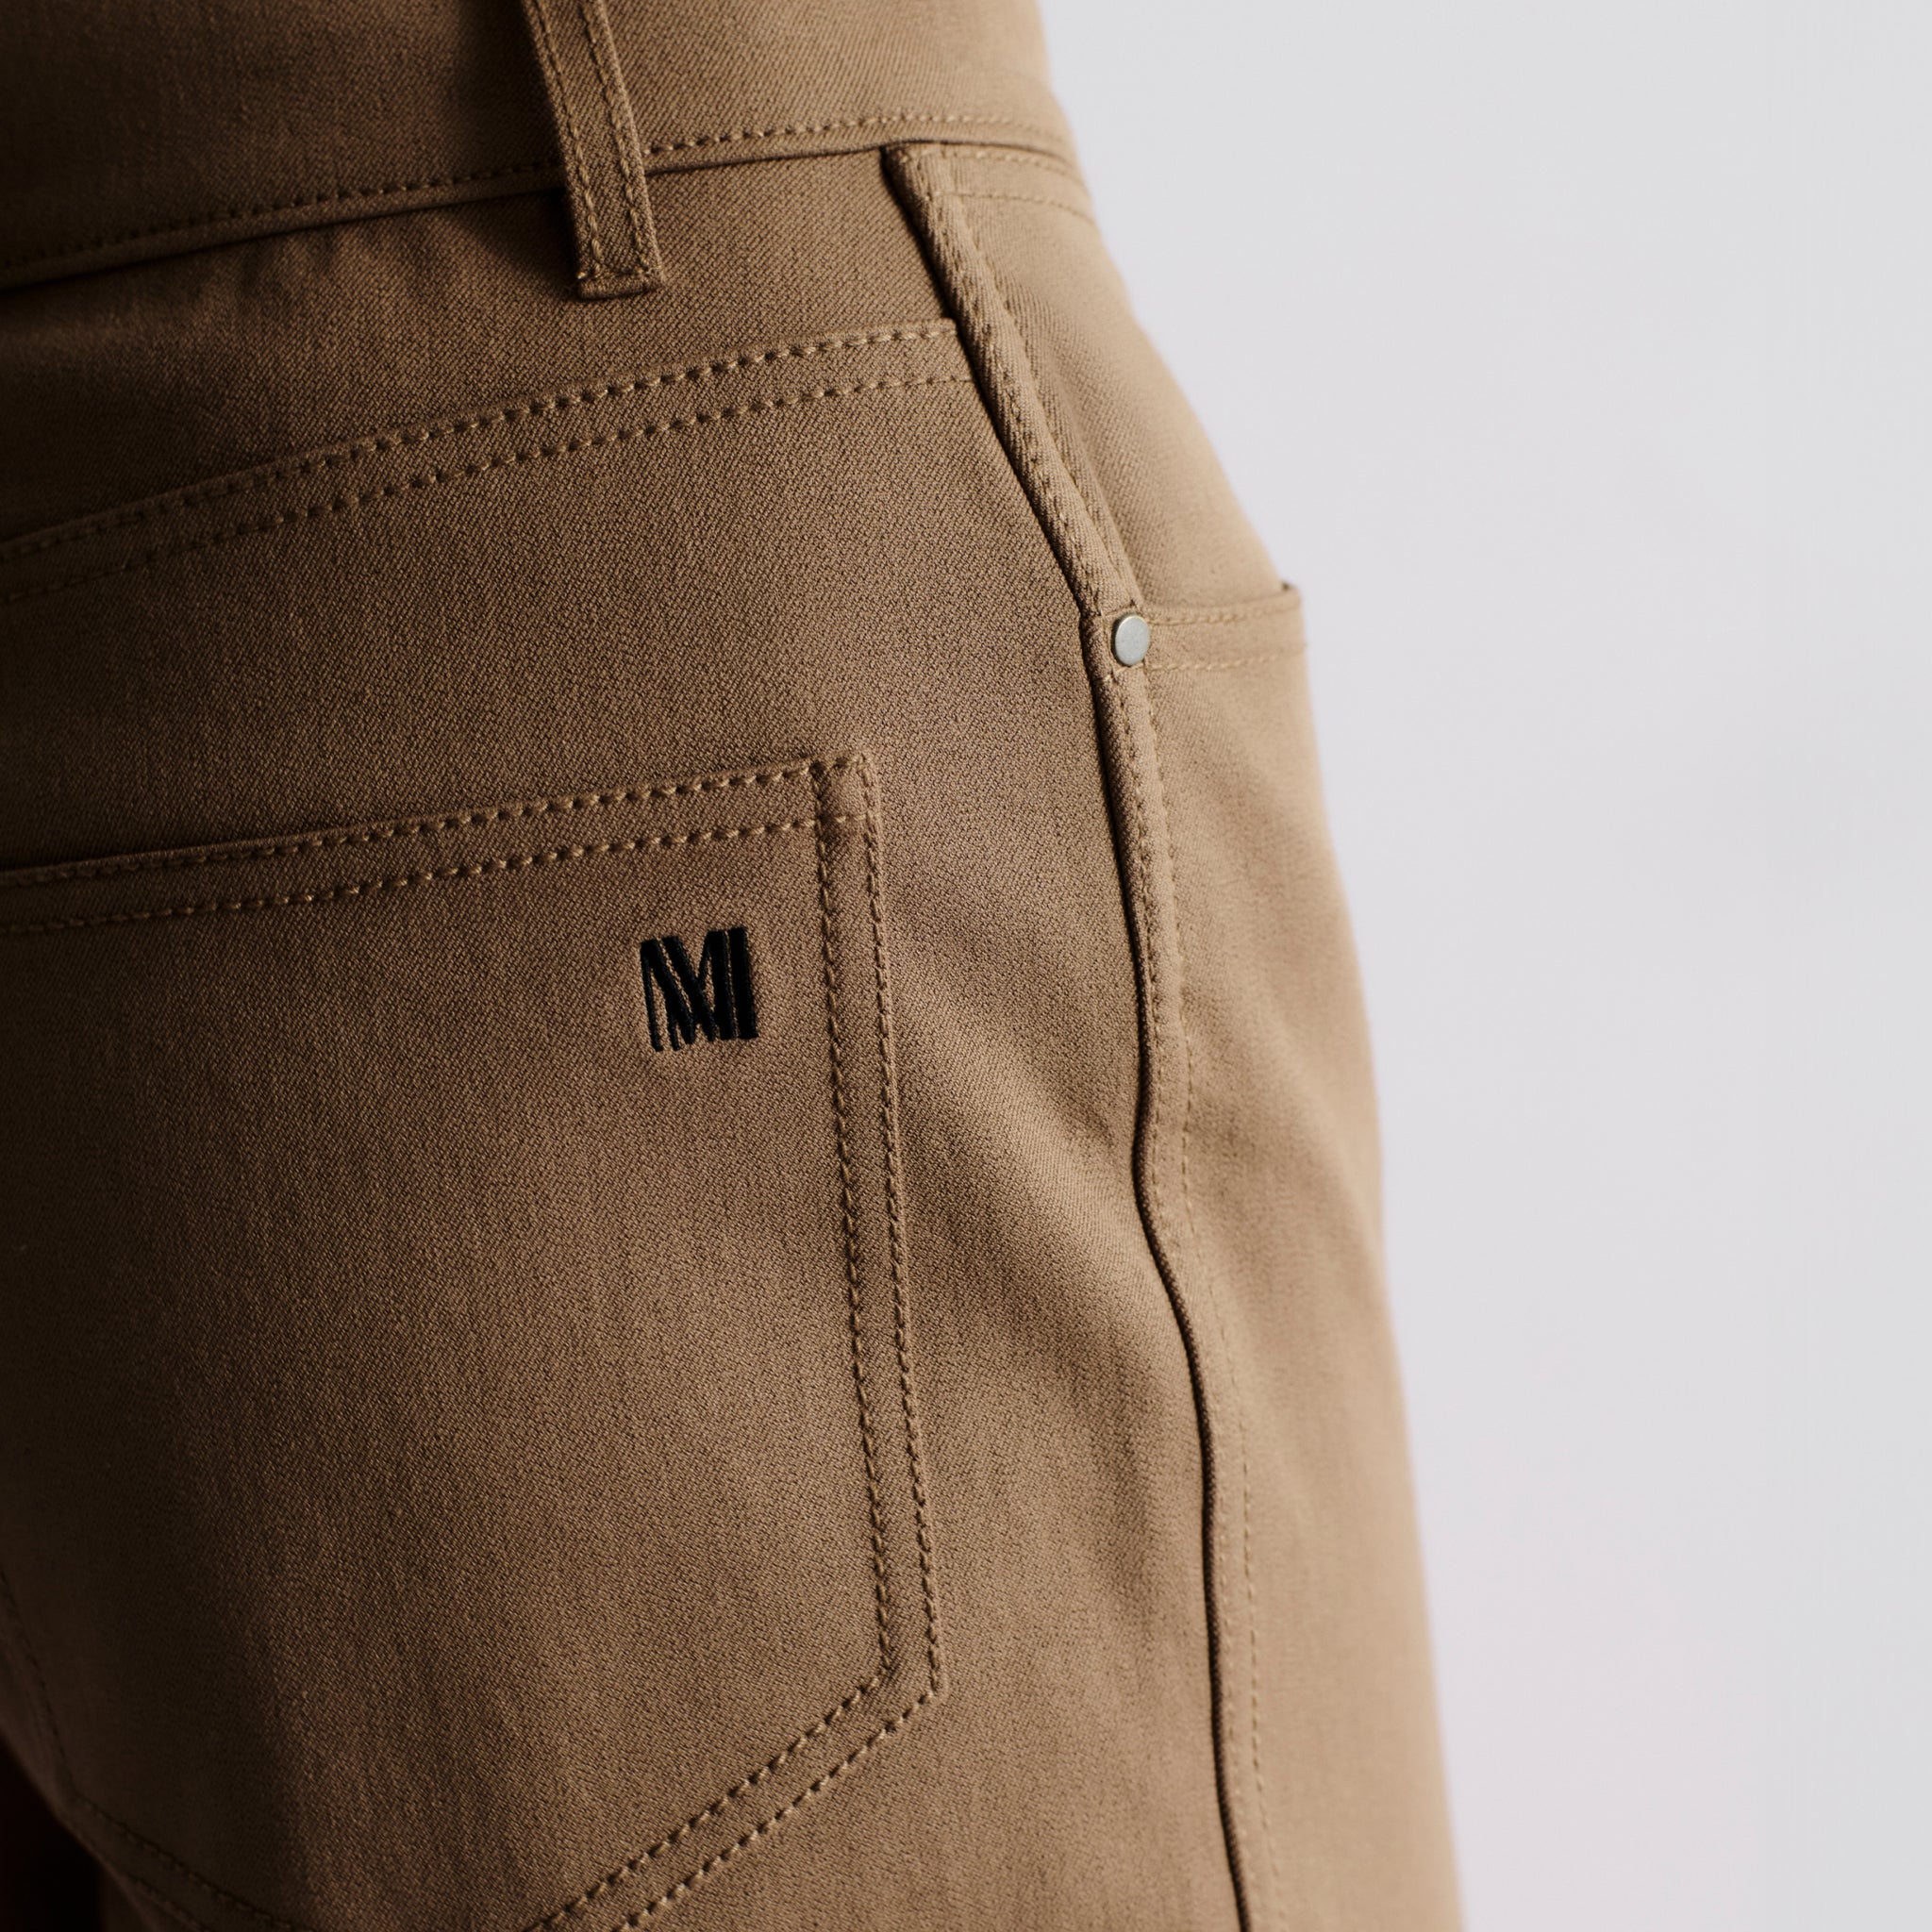 detail image of the M.M. LaFleur Logo on the back pocket of the jean